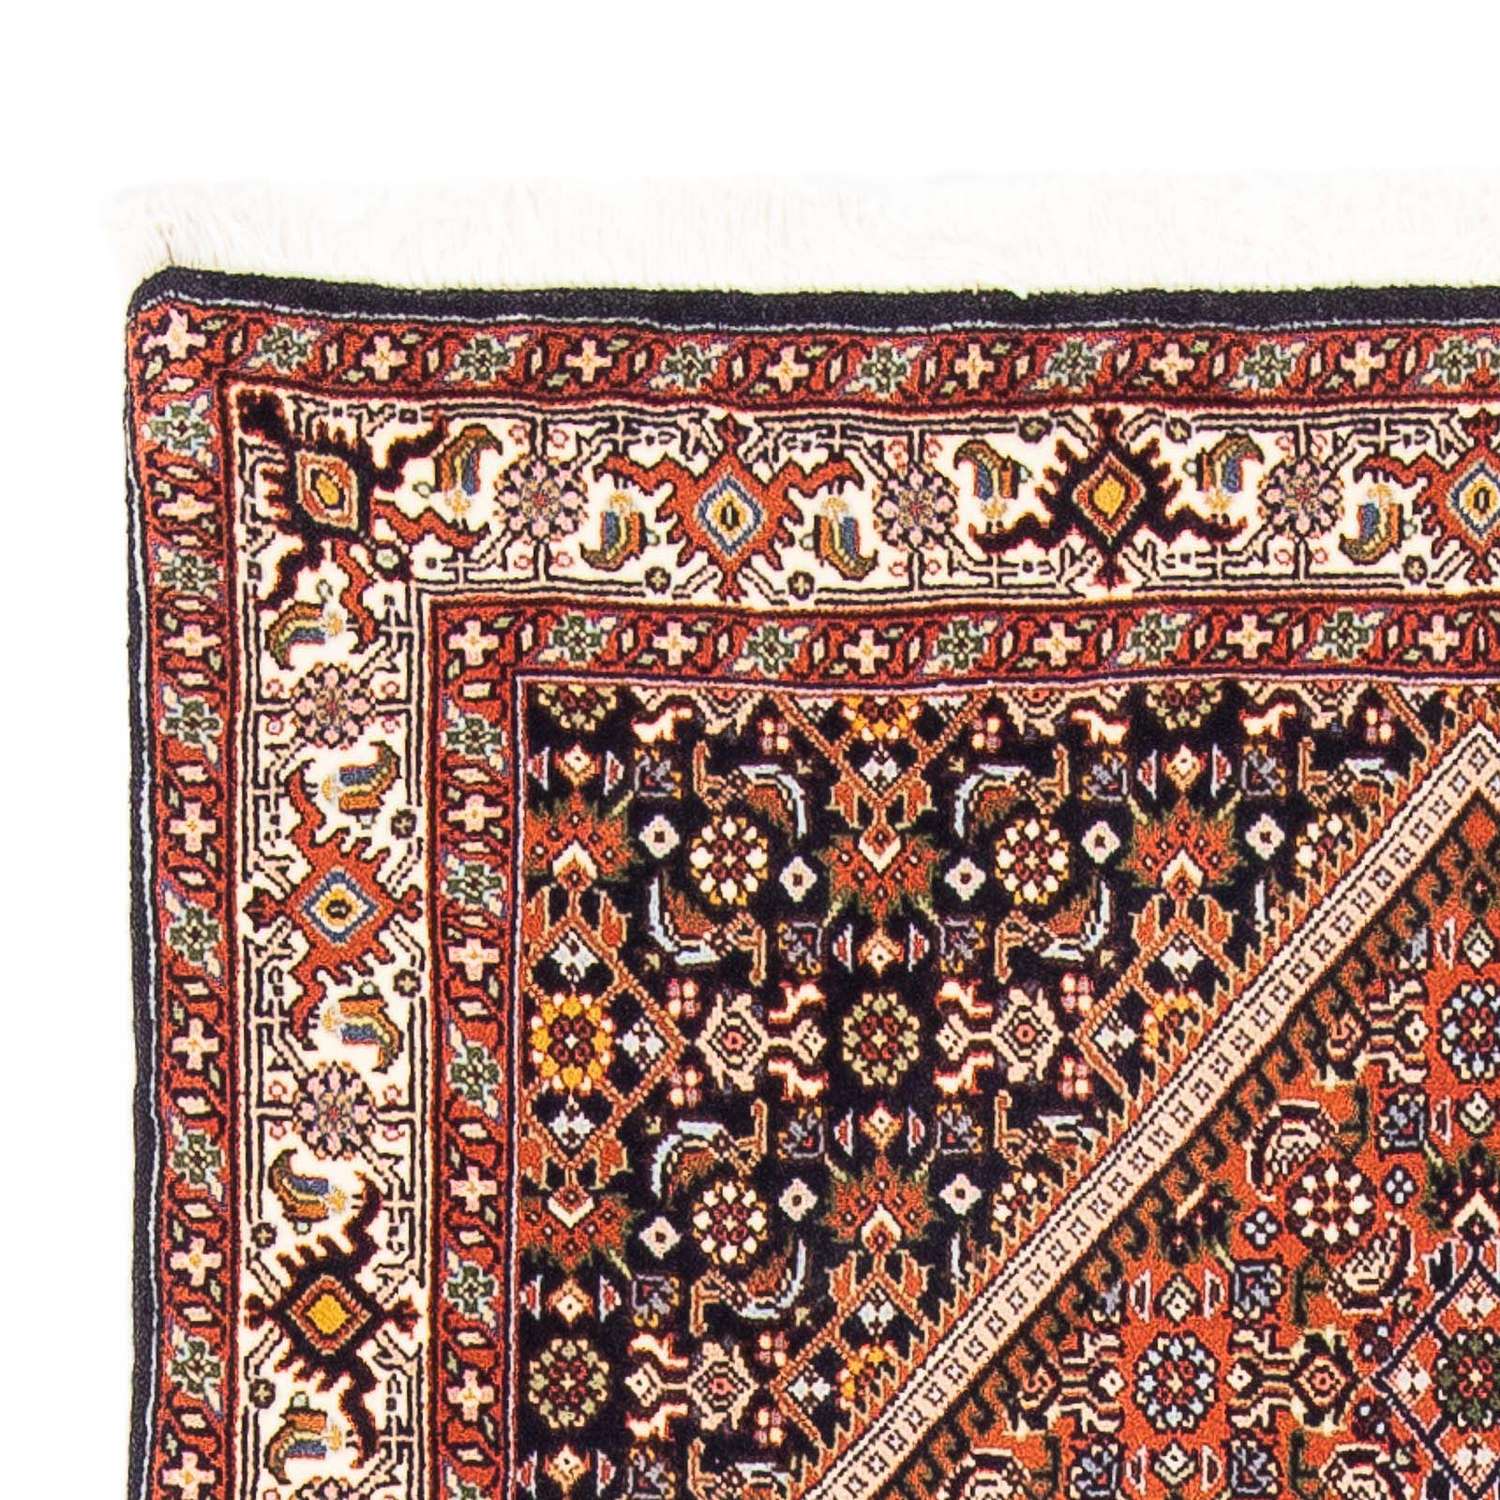 Persisk teppe - Bijar - 169 x 105 cm - laks